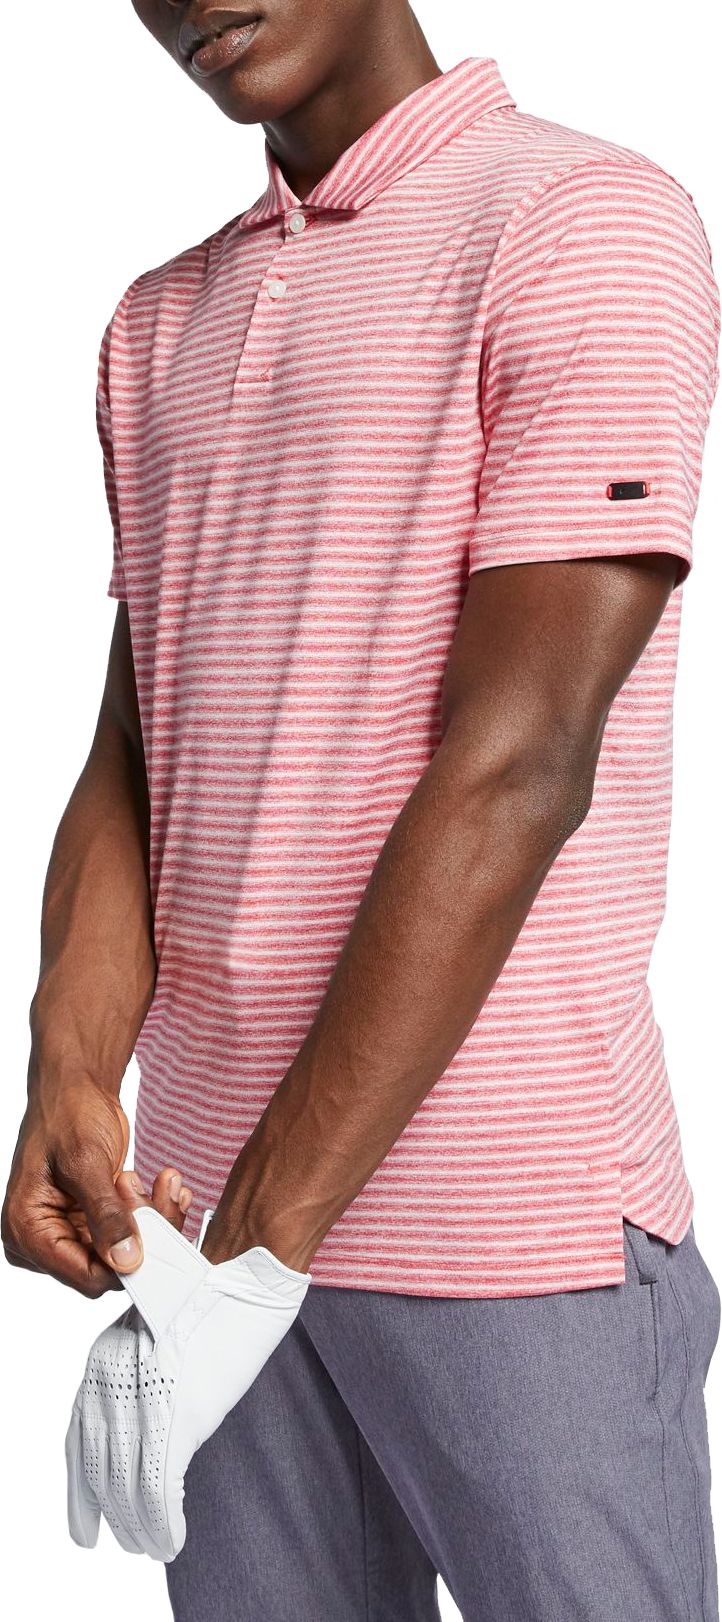 Nike Men's Tiger Woods Vapor Stripe Golf Polo - .97 - .97